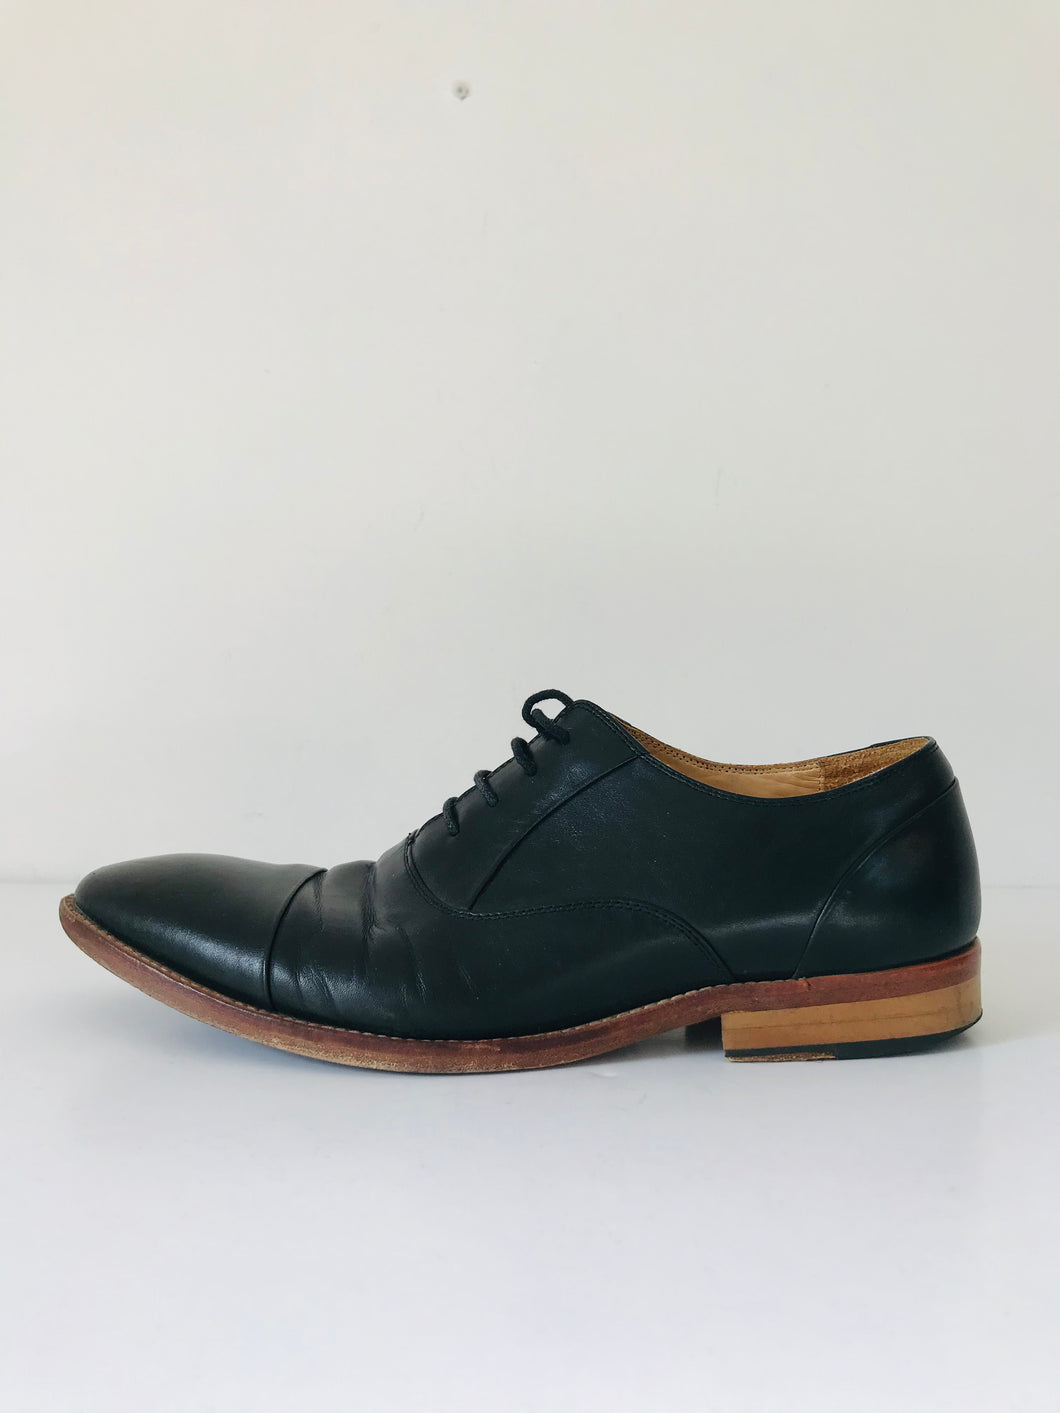 Jones Bootmaker Men’s Leather Oxford Shoes | UK7 41 | Black